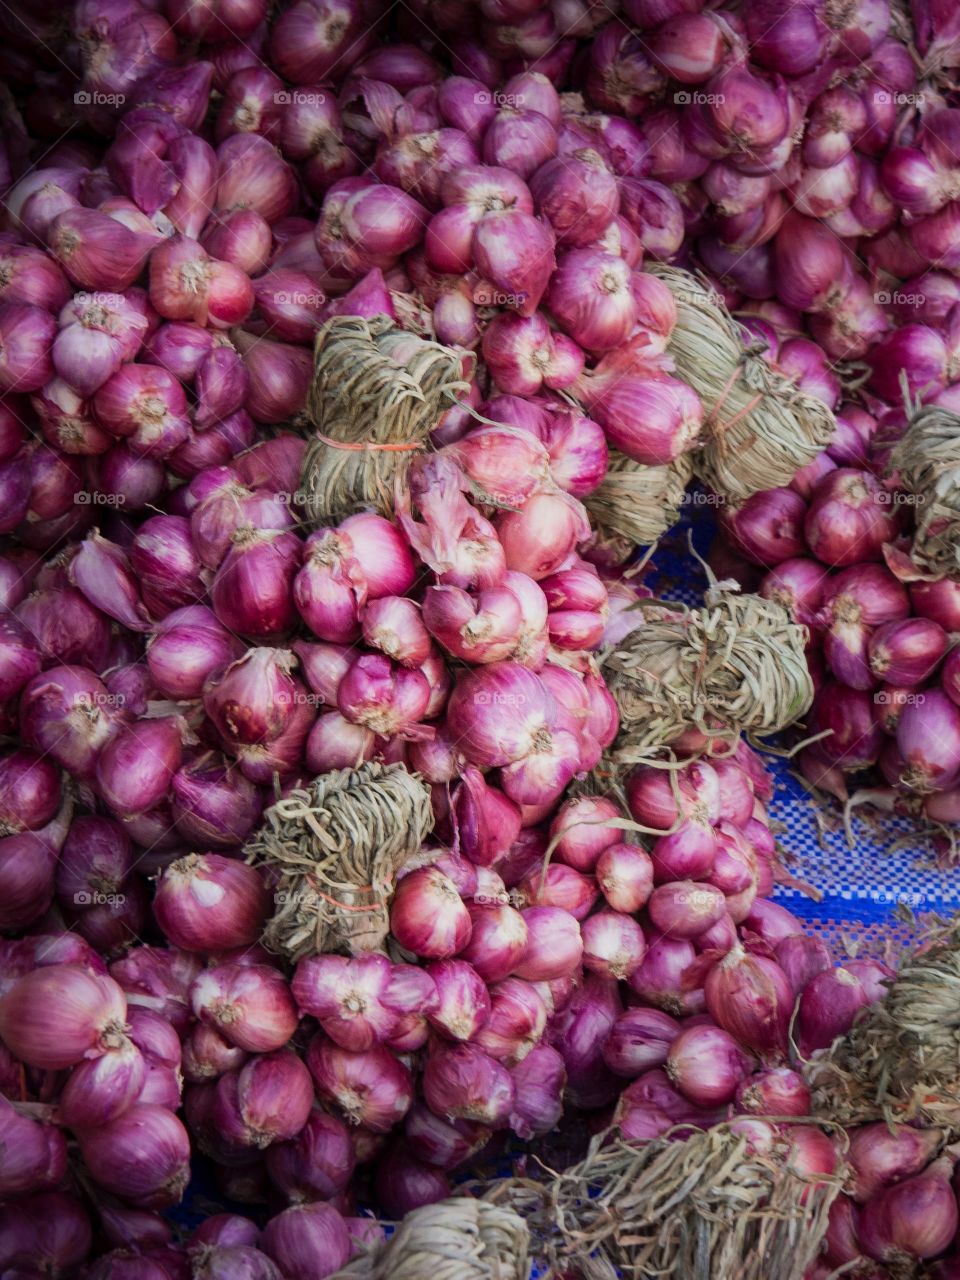 Spring Onions Season at Street Market in Thailand